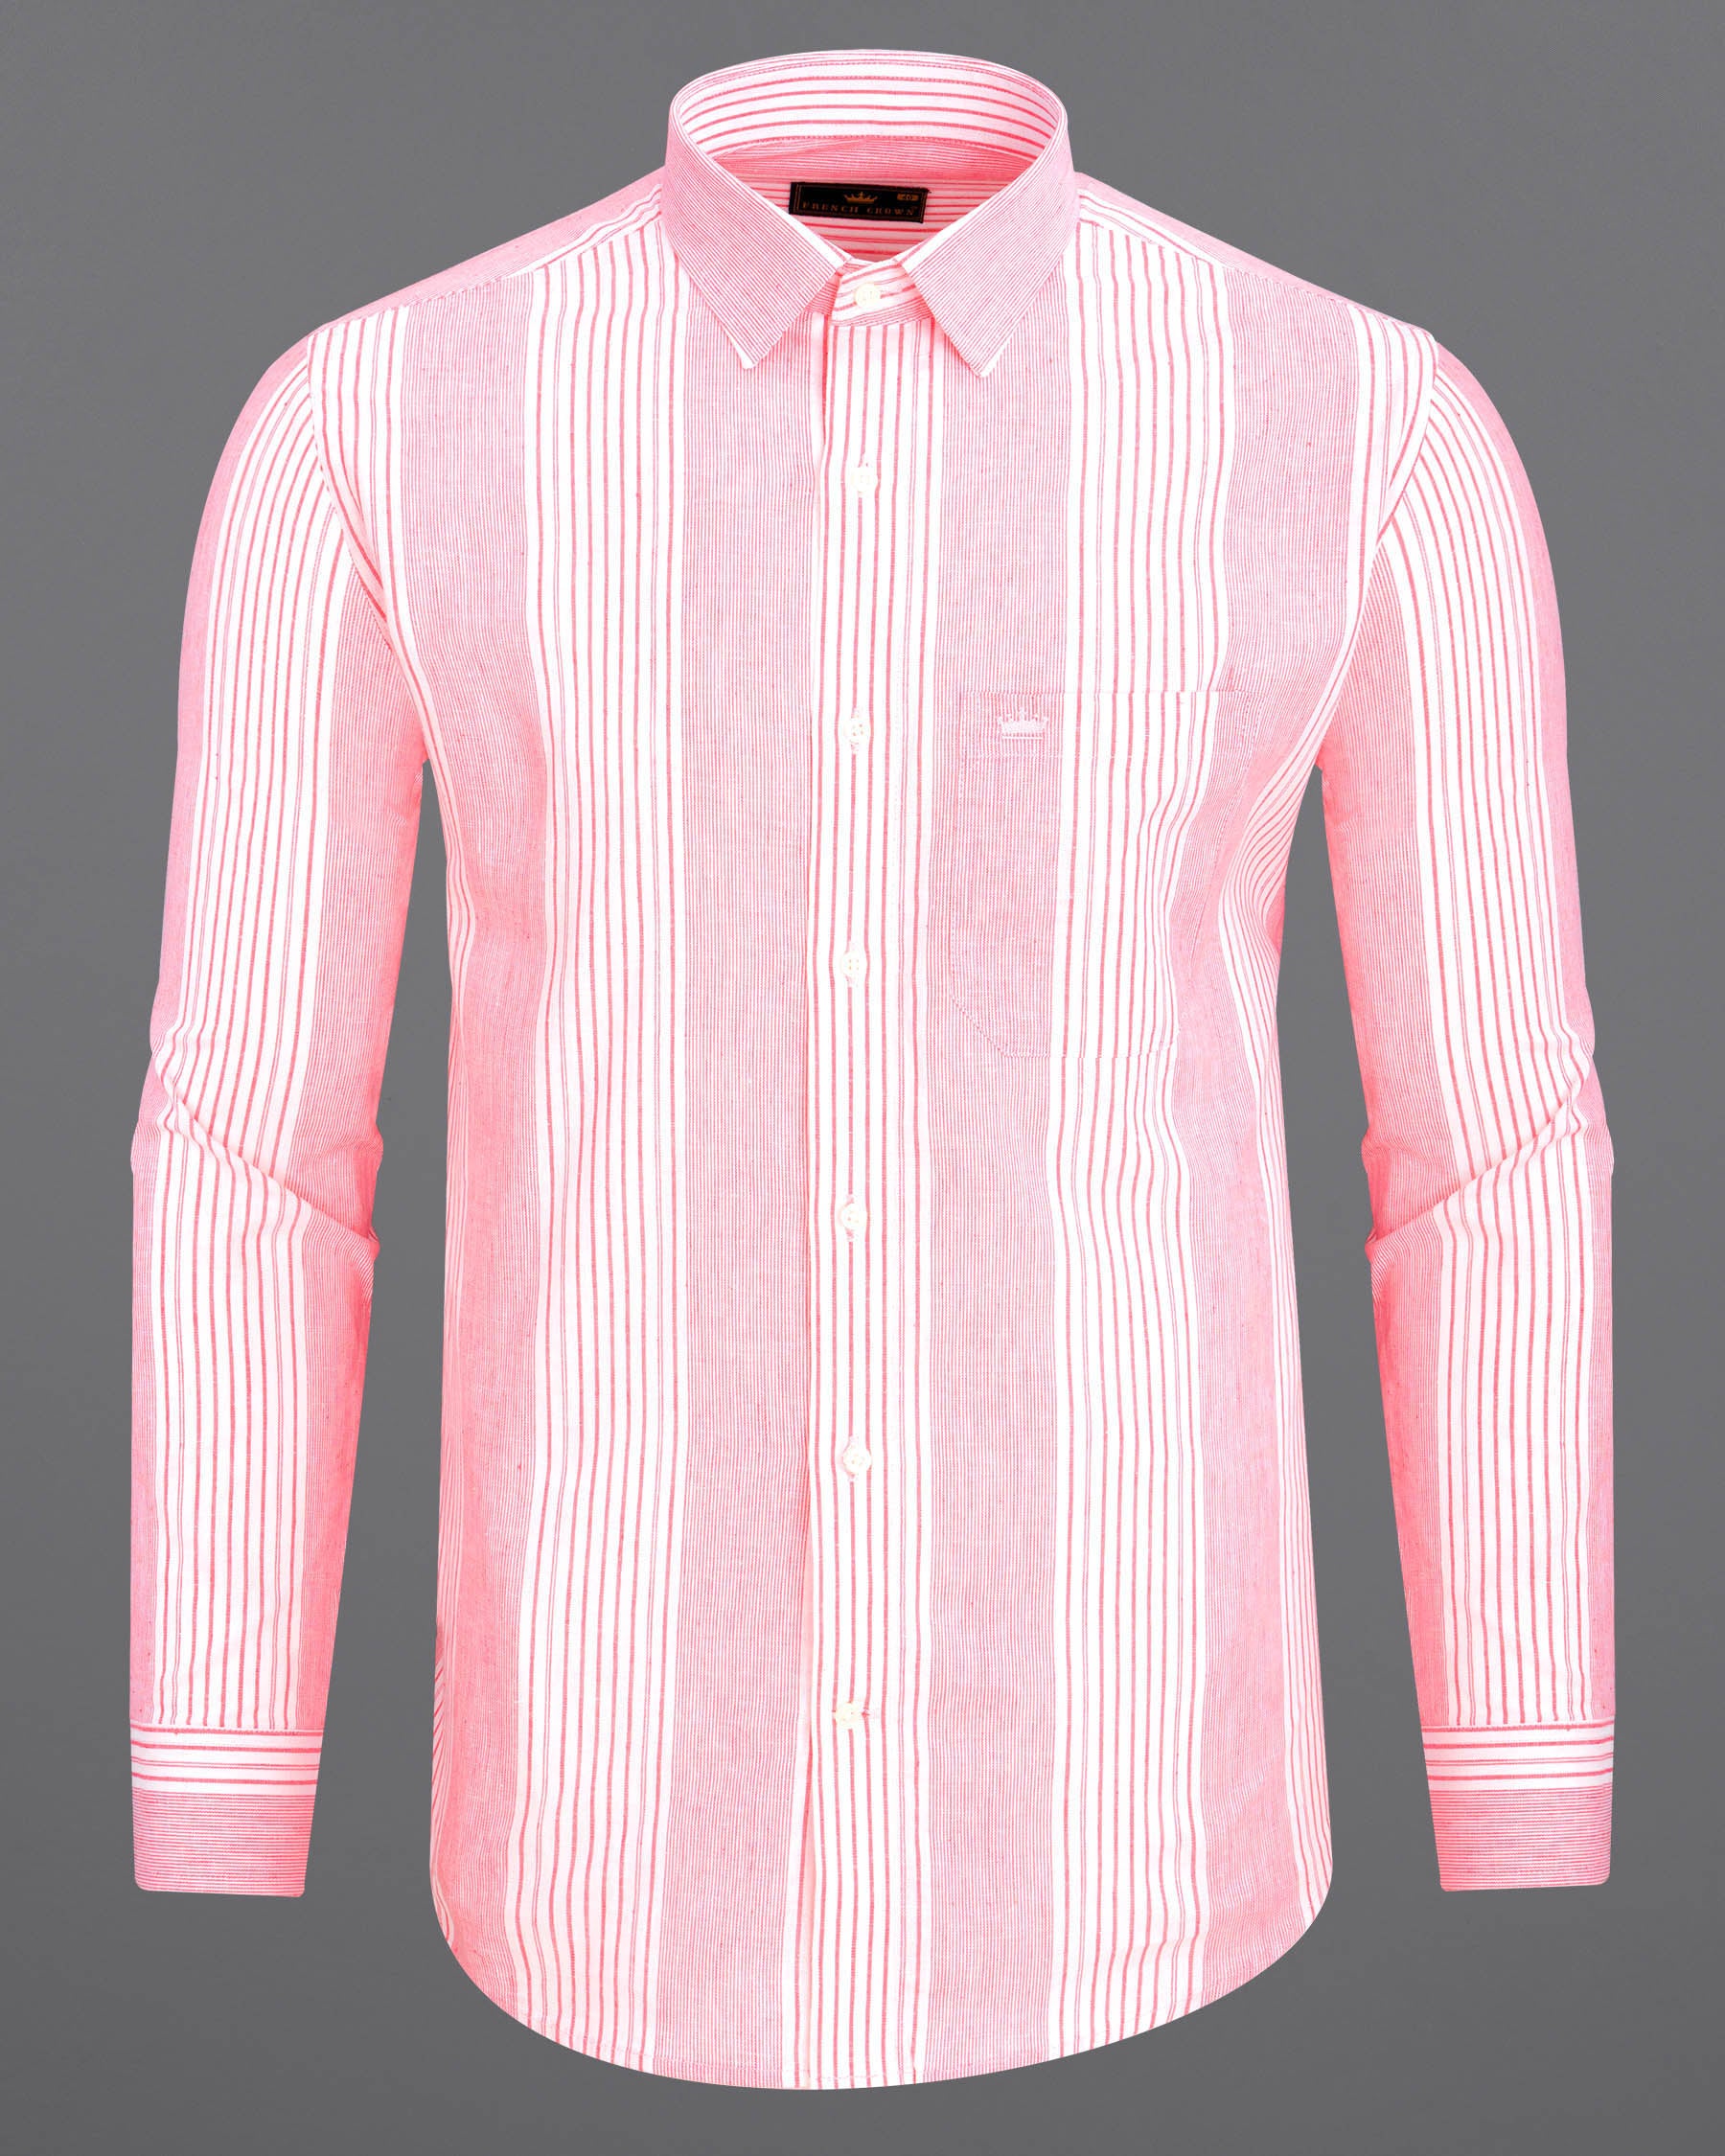 DONNI. Pink Matching Sets | Shopbop